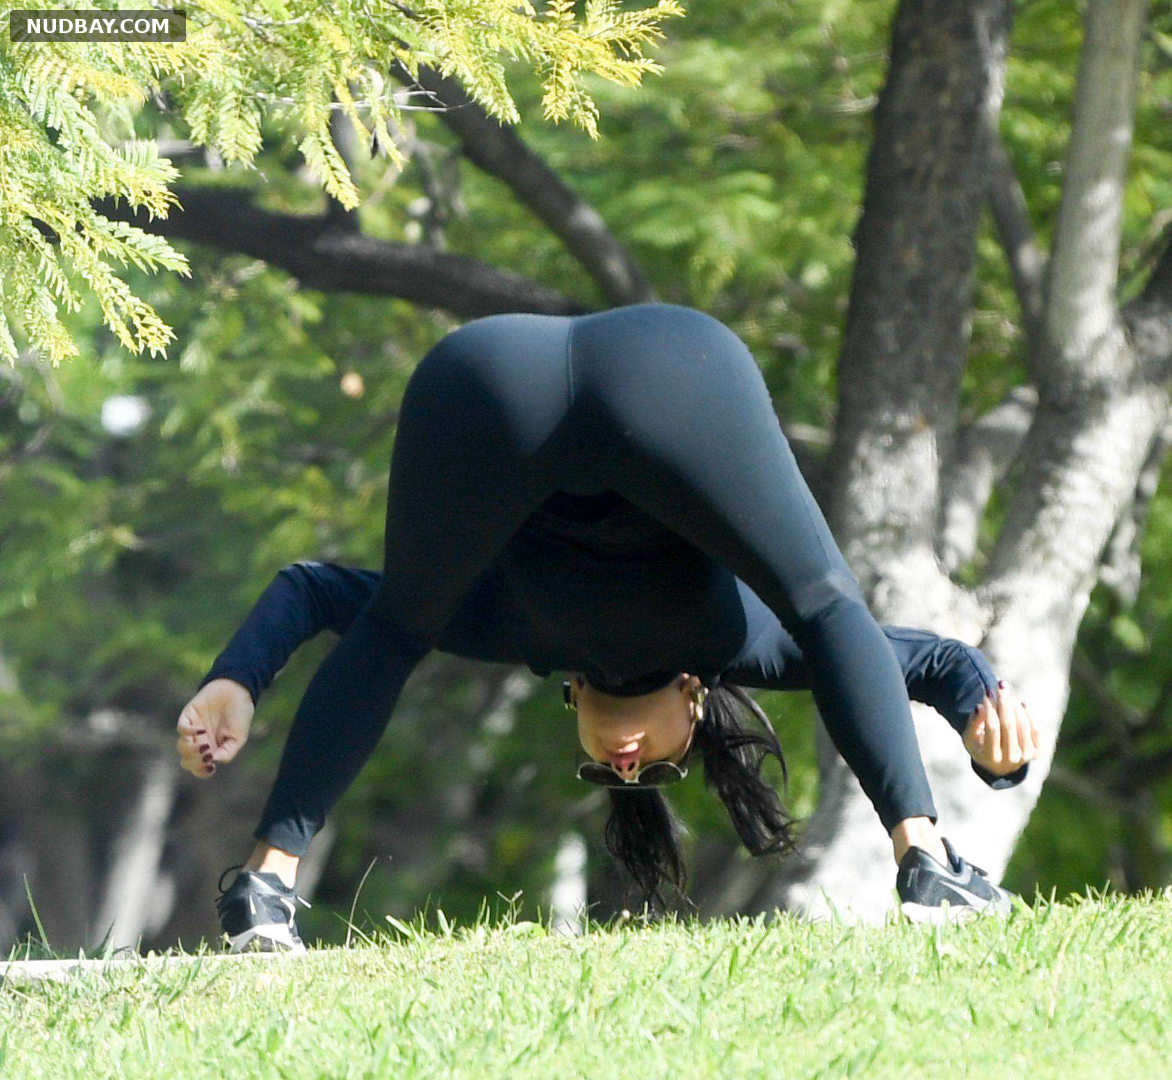 Nicole Scherzinger doing gymnastics showing booty 2020